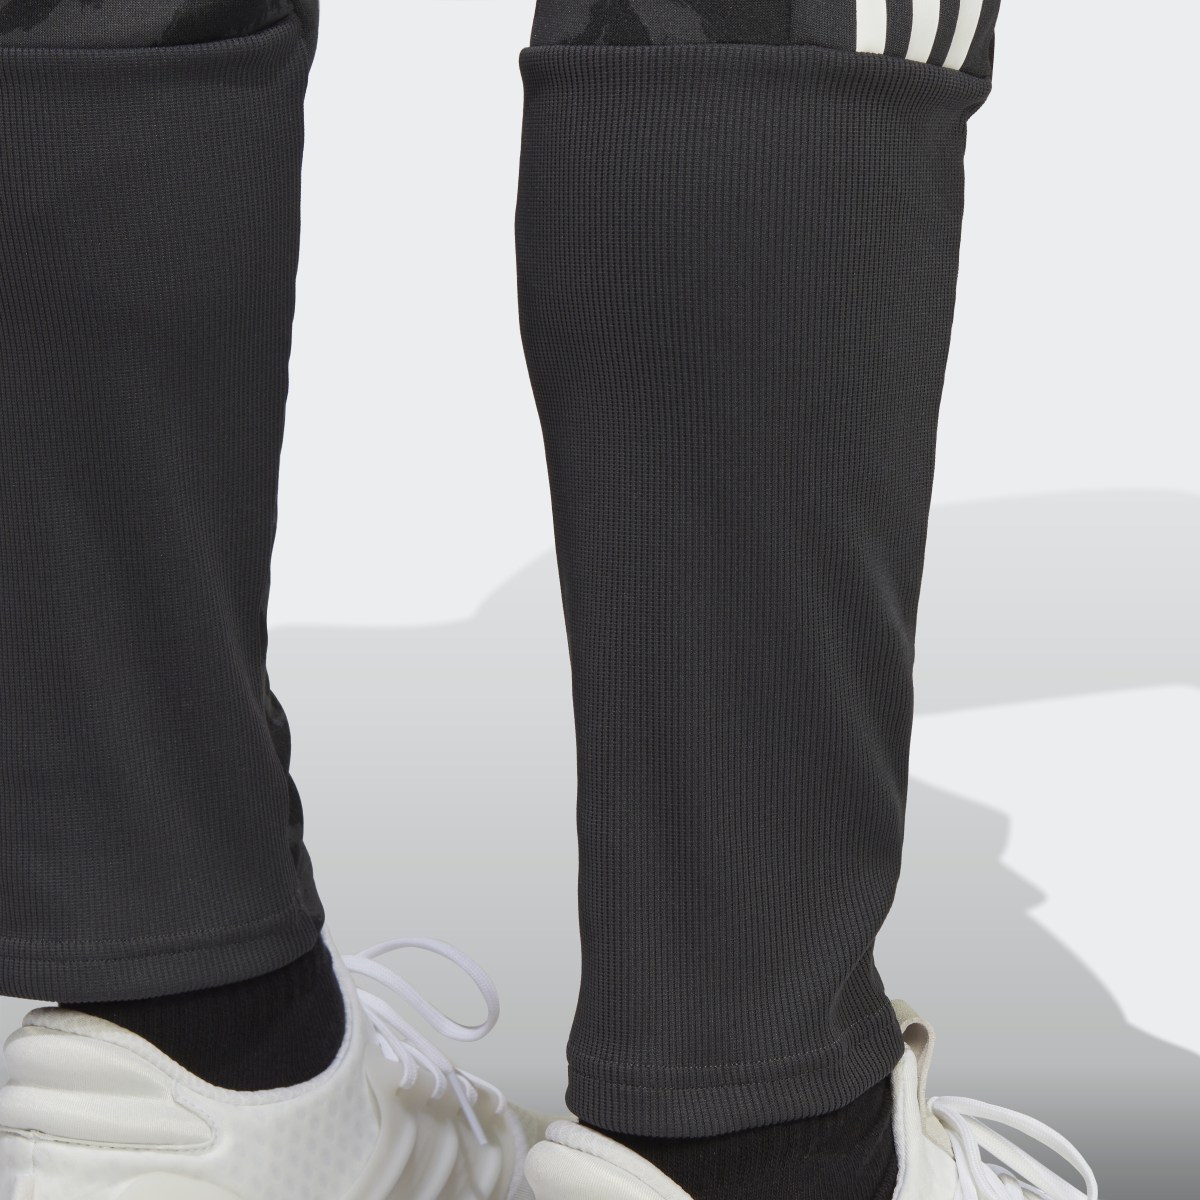 Adidas Pants Deportivos Tiro Suit-Up Lifestyle. 7